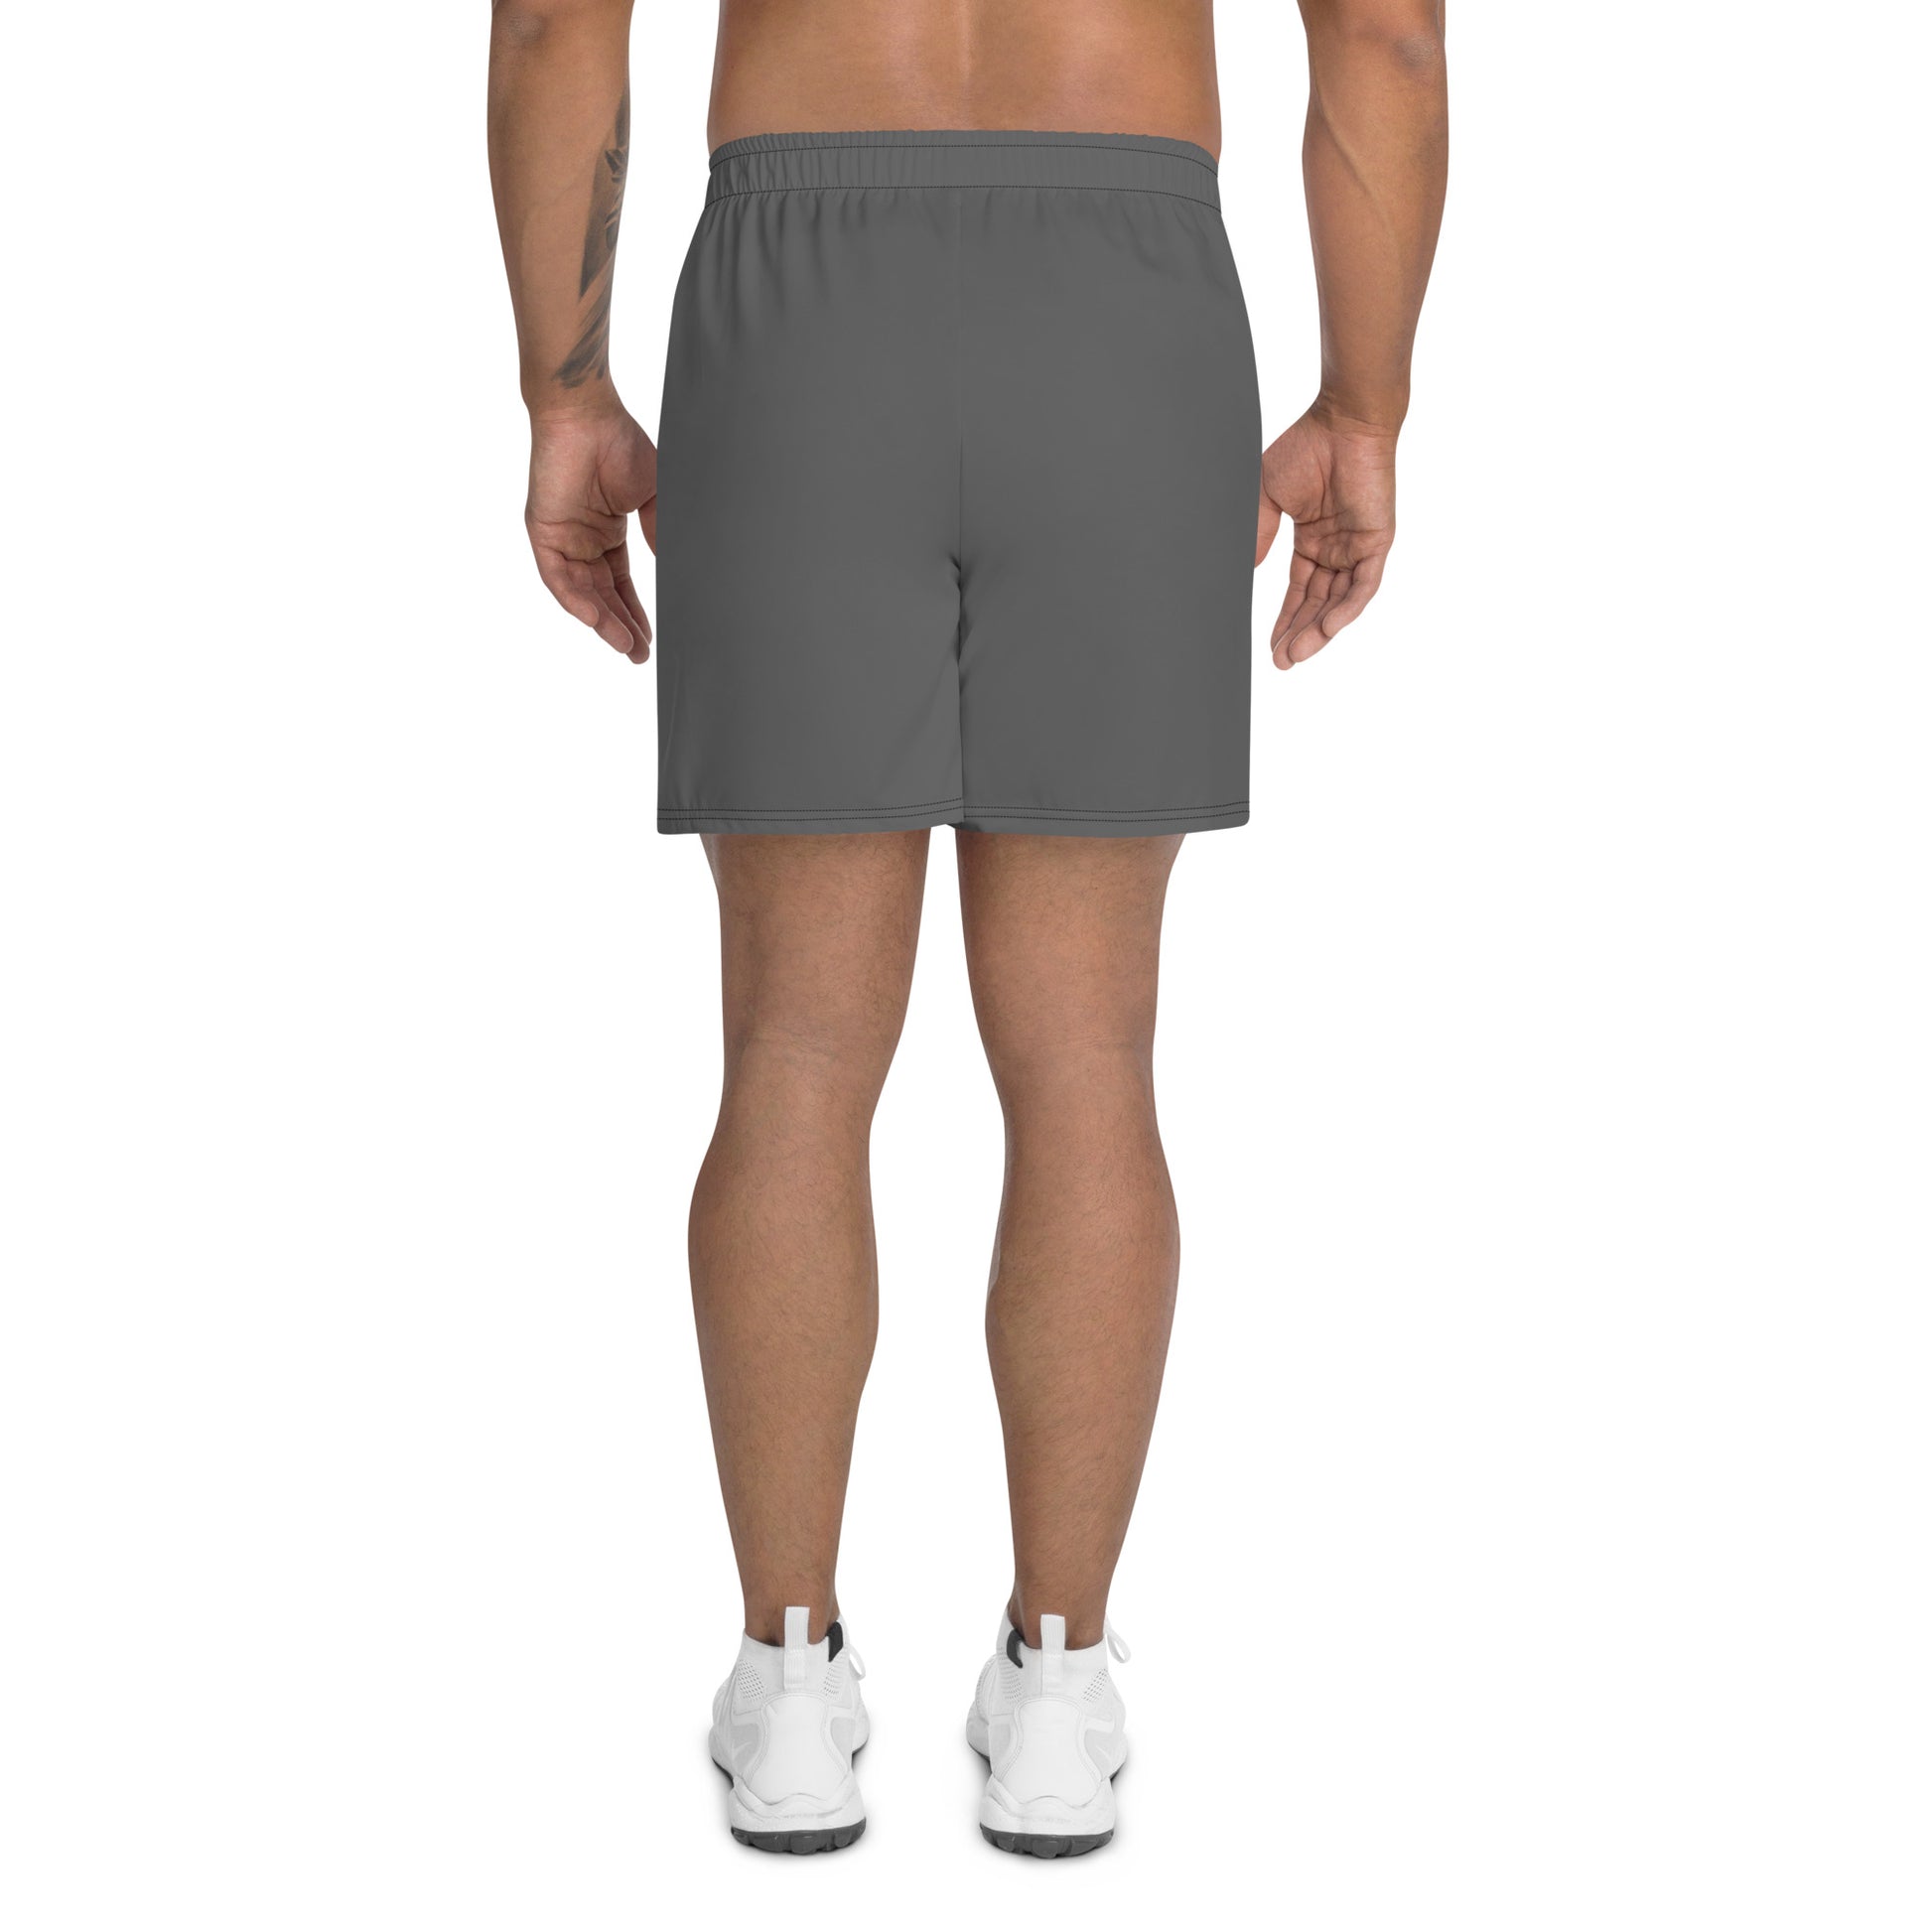 Joystick men's athletic shorts